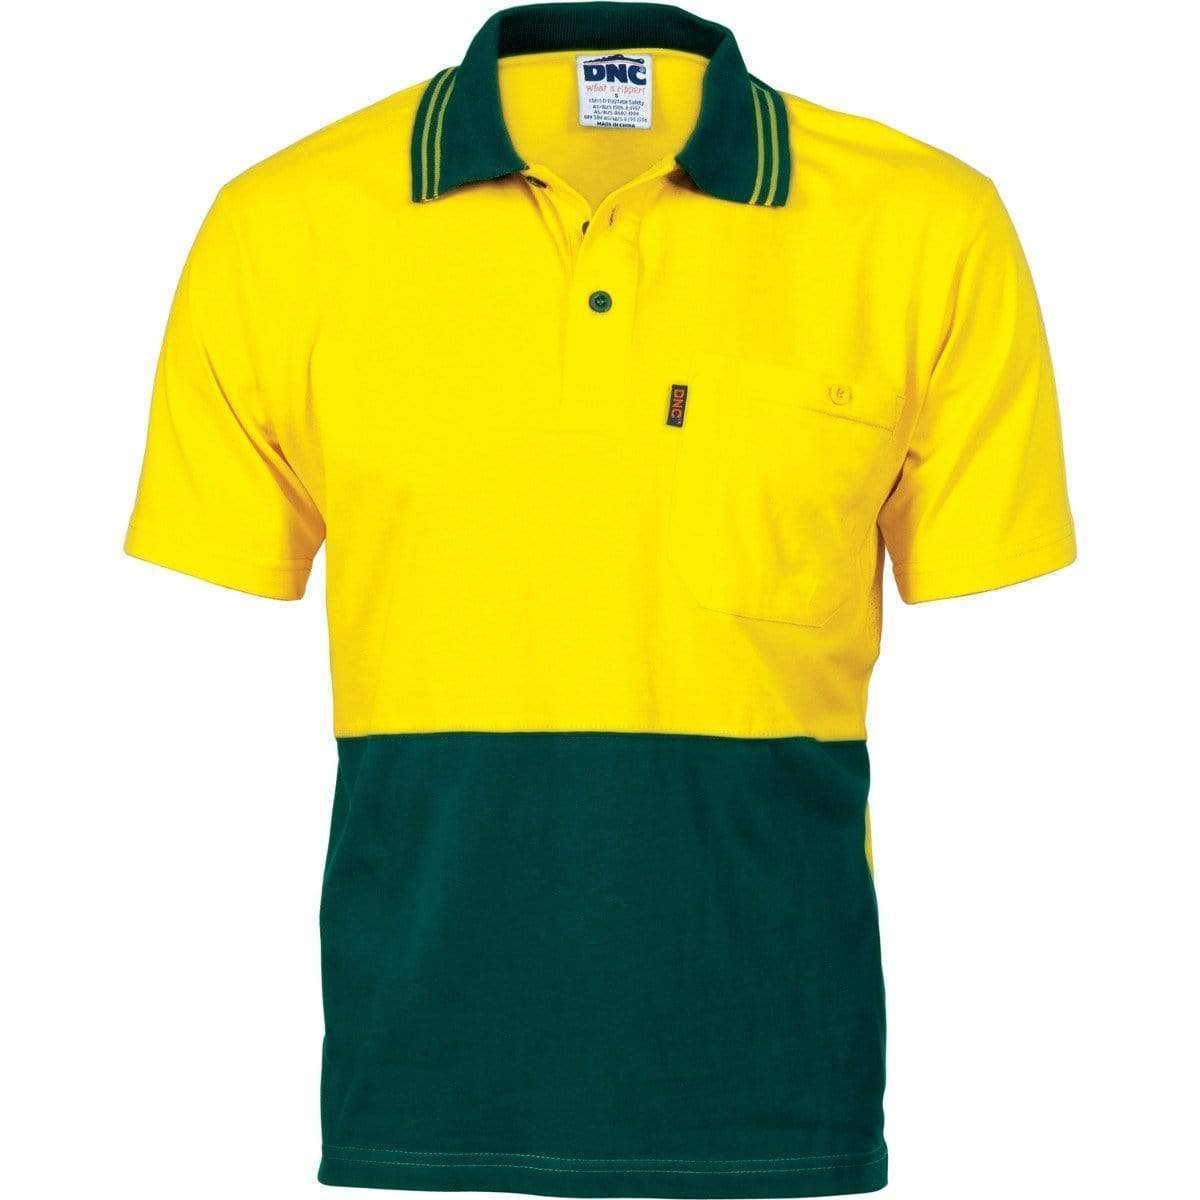 Dnc Workwear Hi-vis Cool-breeze Cotton Jersey Short Sleeve Polo Shirt With Underarm Cotton Mesh - 3845 Work Wear DNC Workwear Yellow/Bottle Green XS 